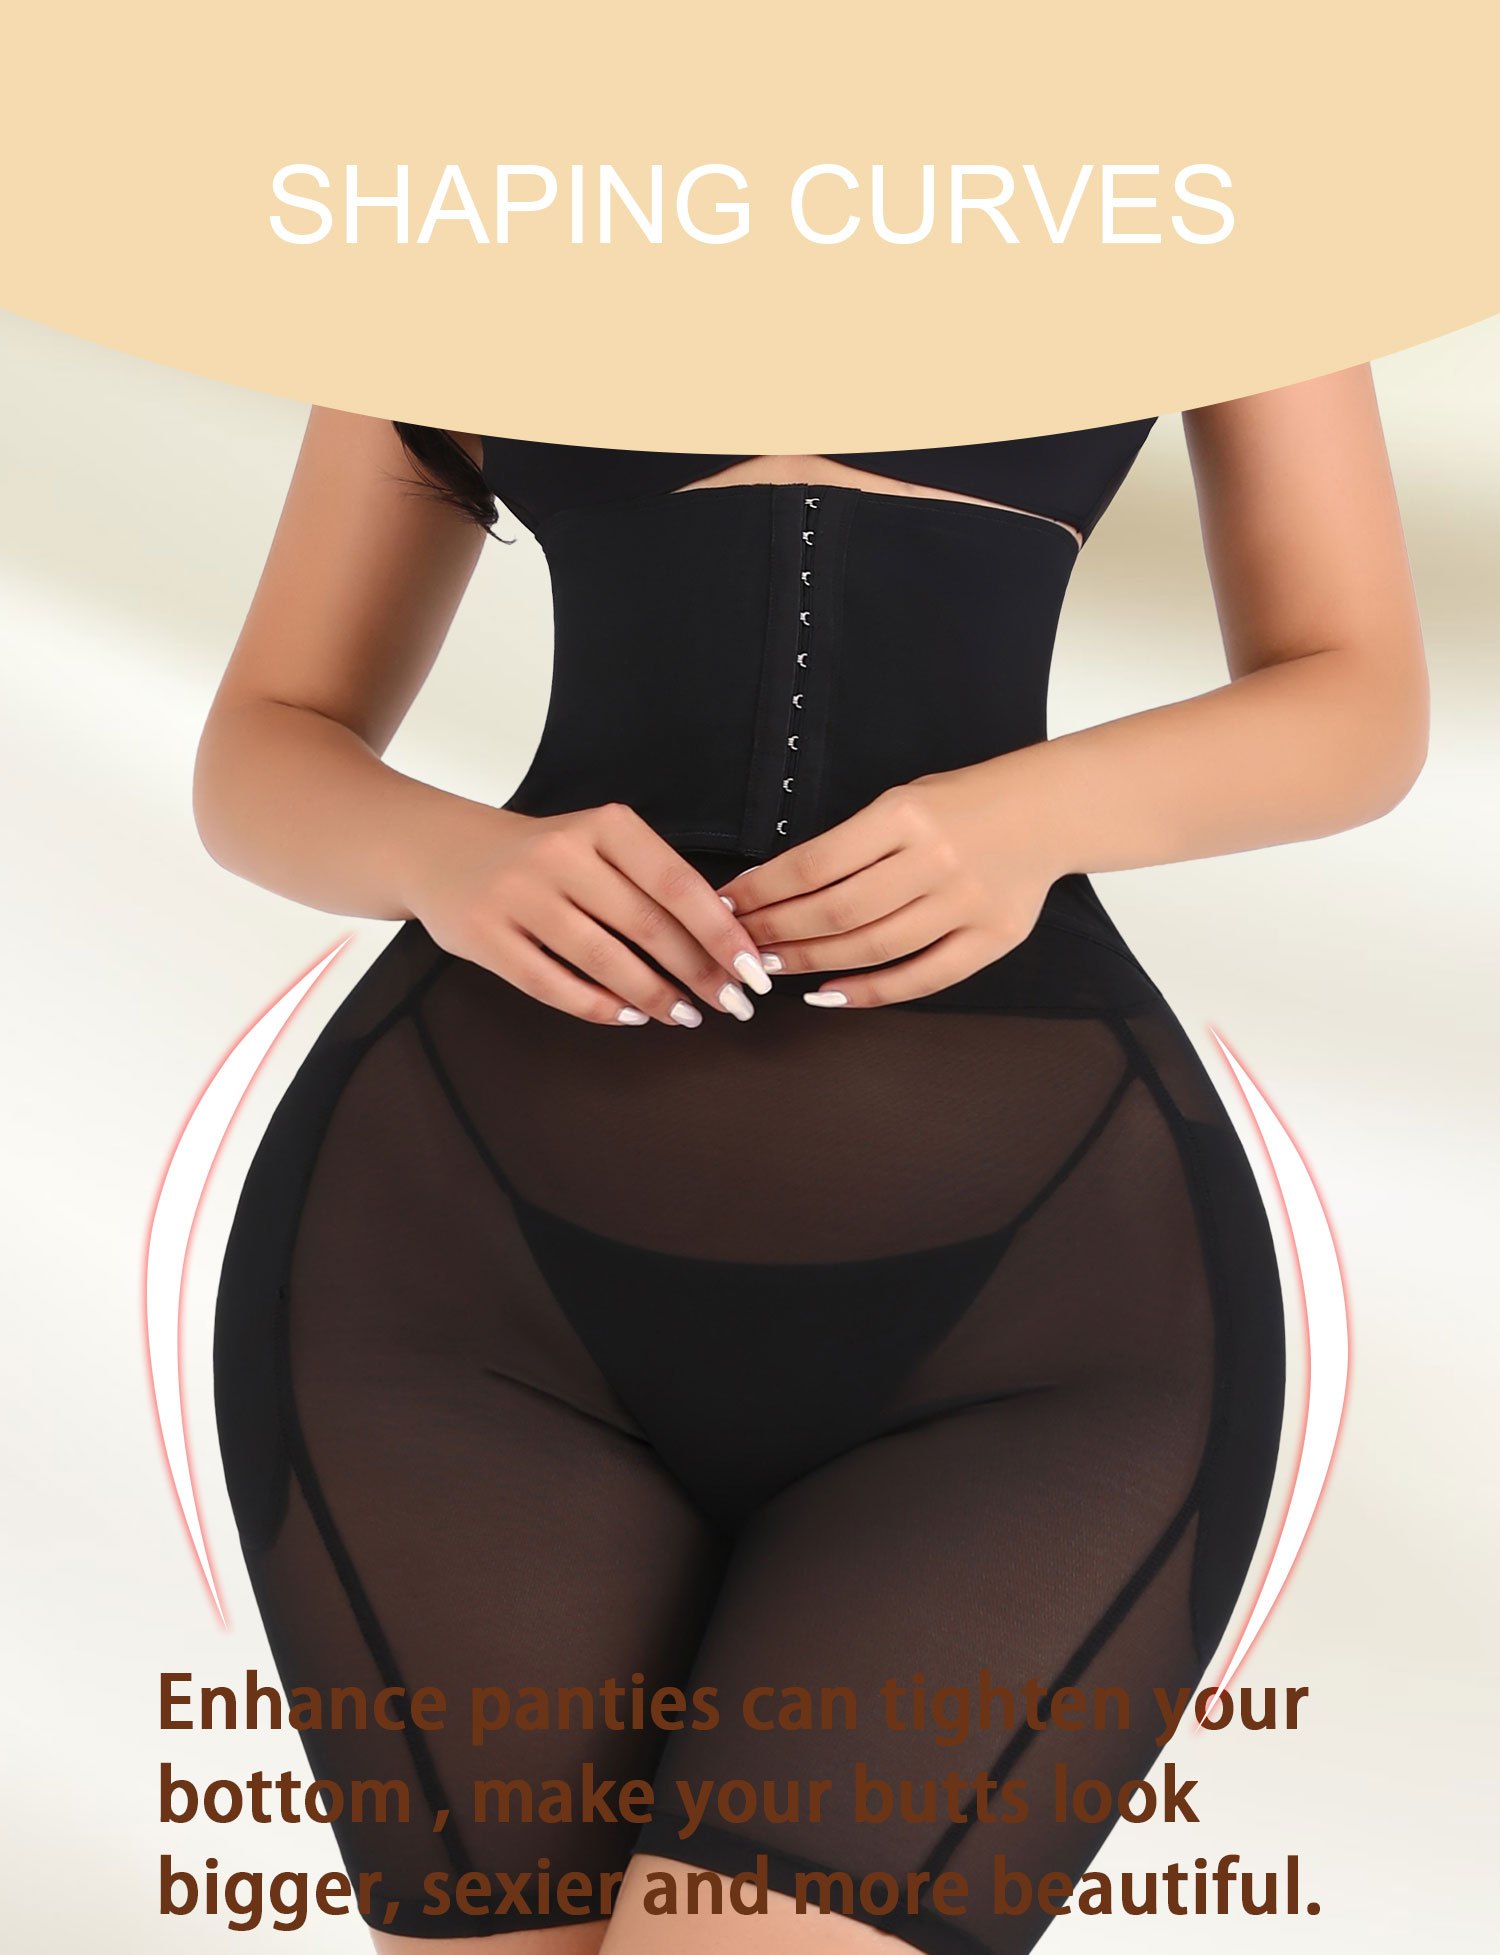 Women's High Waisted Tummy Control Slimming Belly Band Panties, Warmth Butt  Lifter Trainer Corset Body Shaper Underwear, Women's Lingerie & Underwear